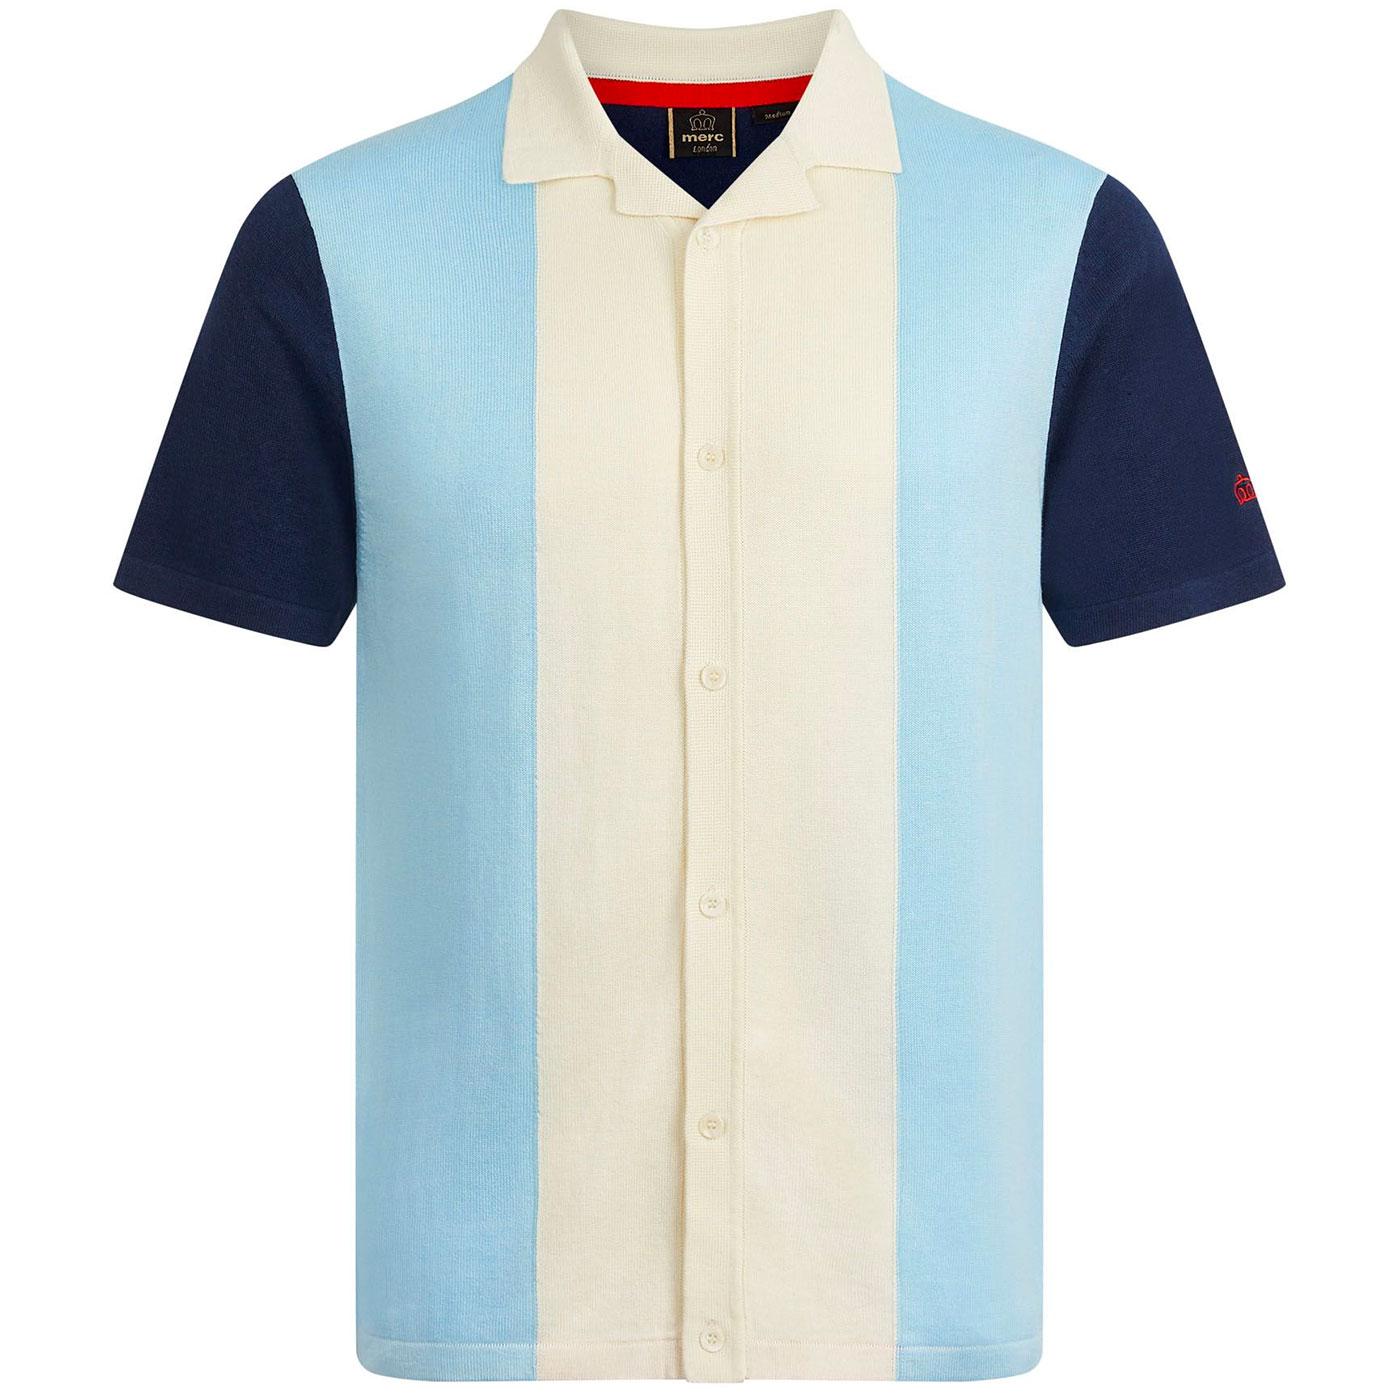 Banning MERC 1960s Mod Knitted Panel Polo Shirt B